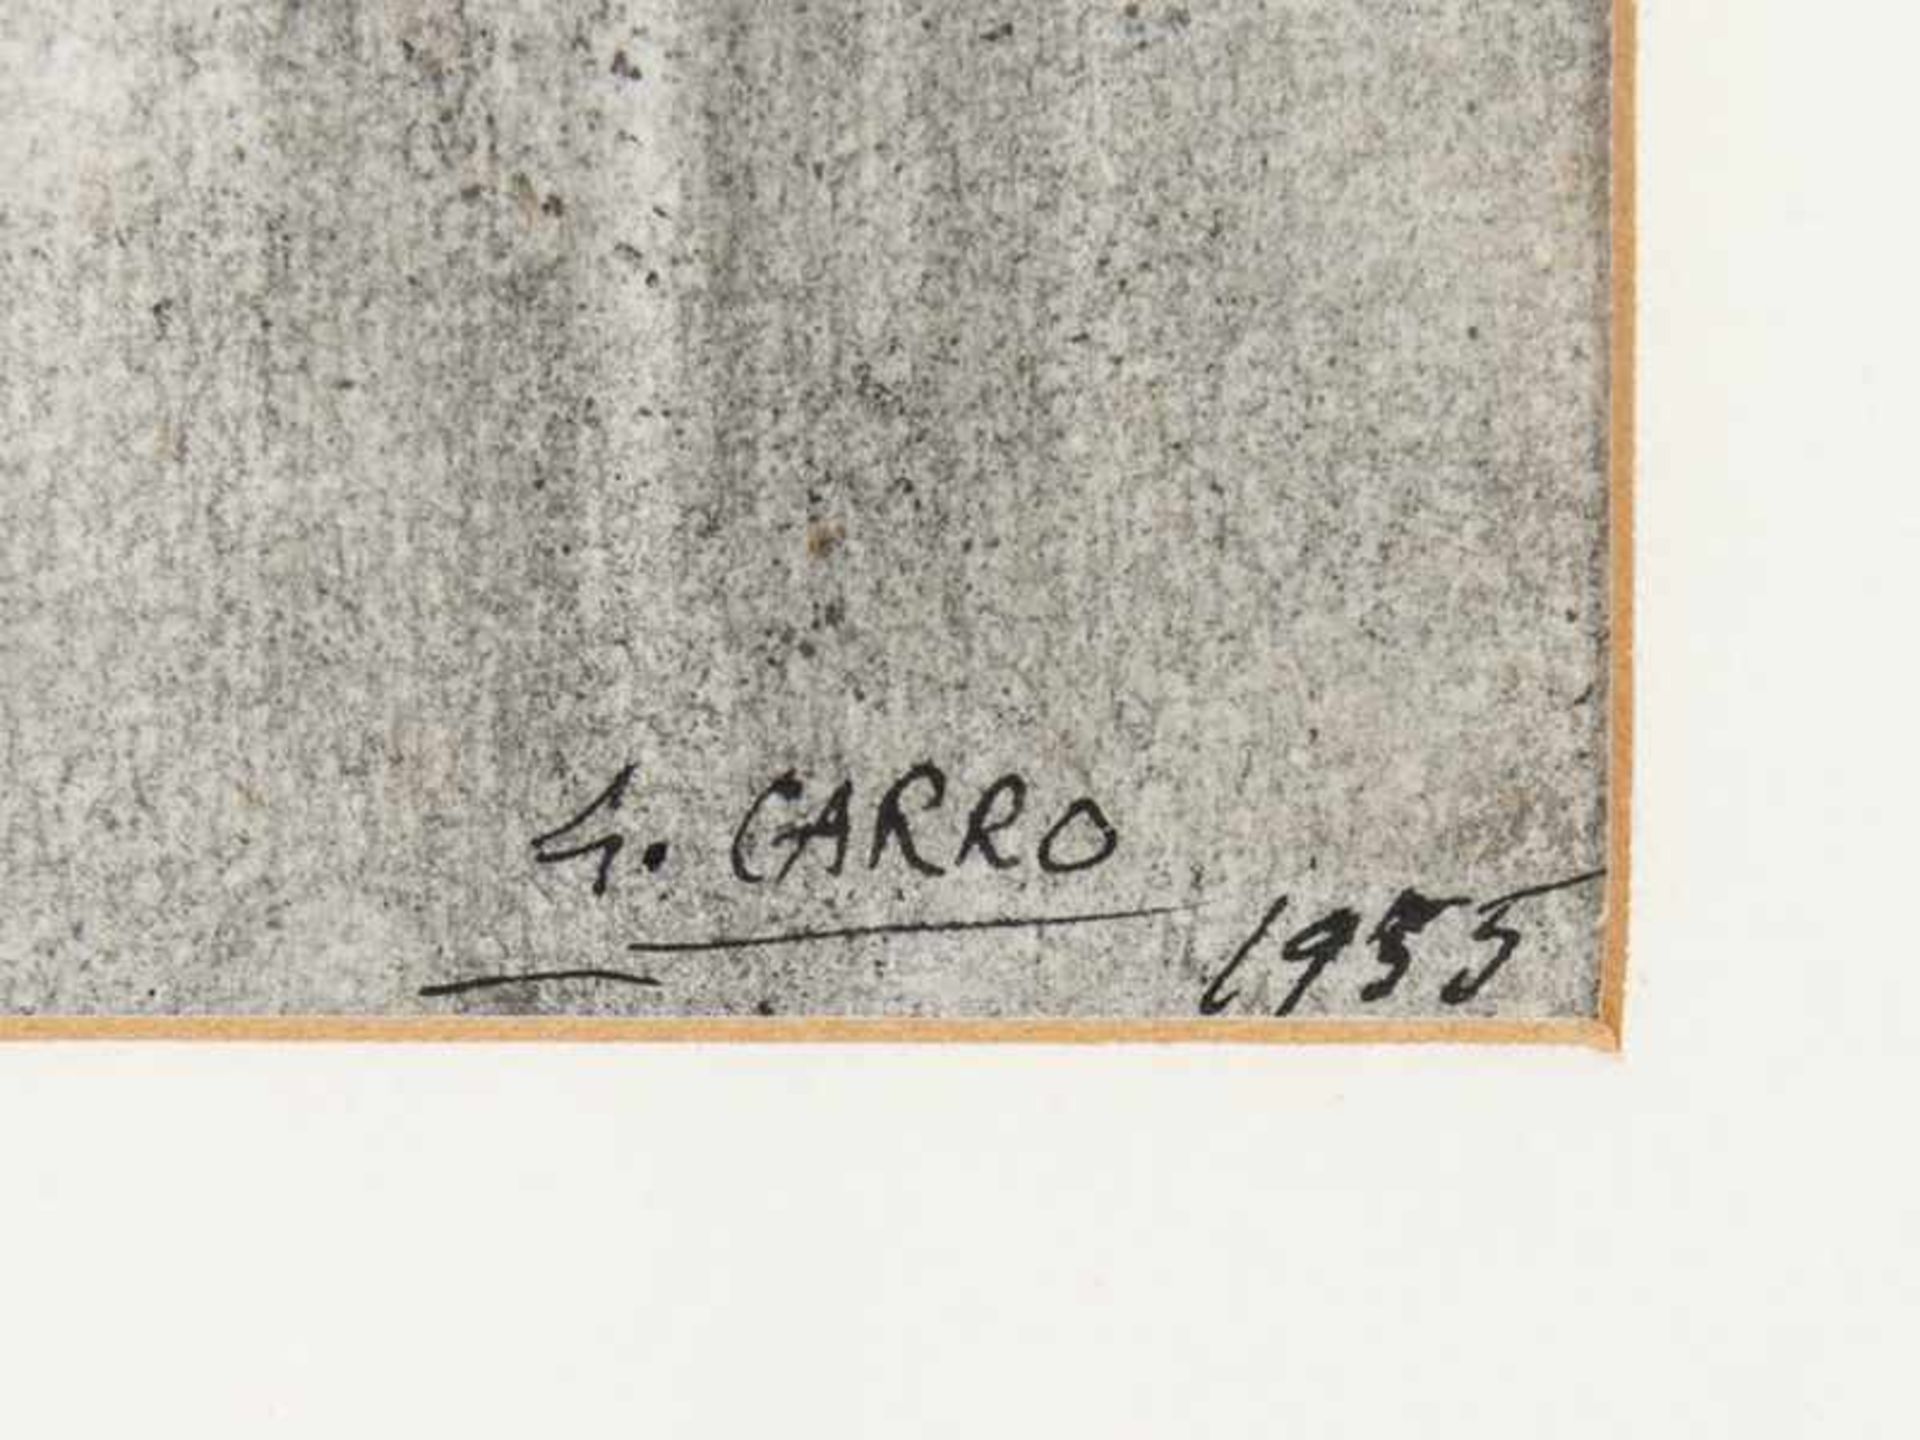 Carro, Guglielmo (1913 - 2001). - Bild 3 aus 10